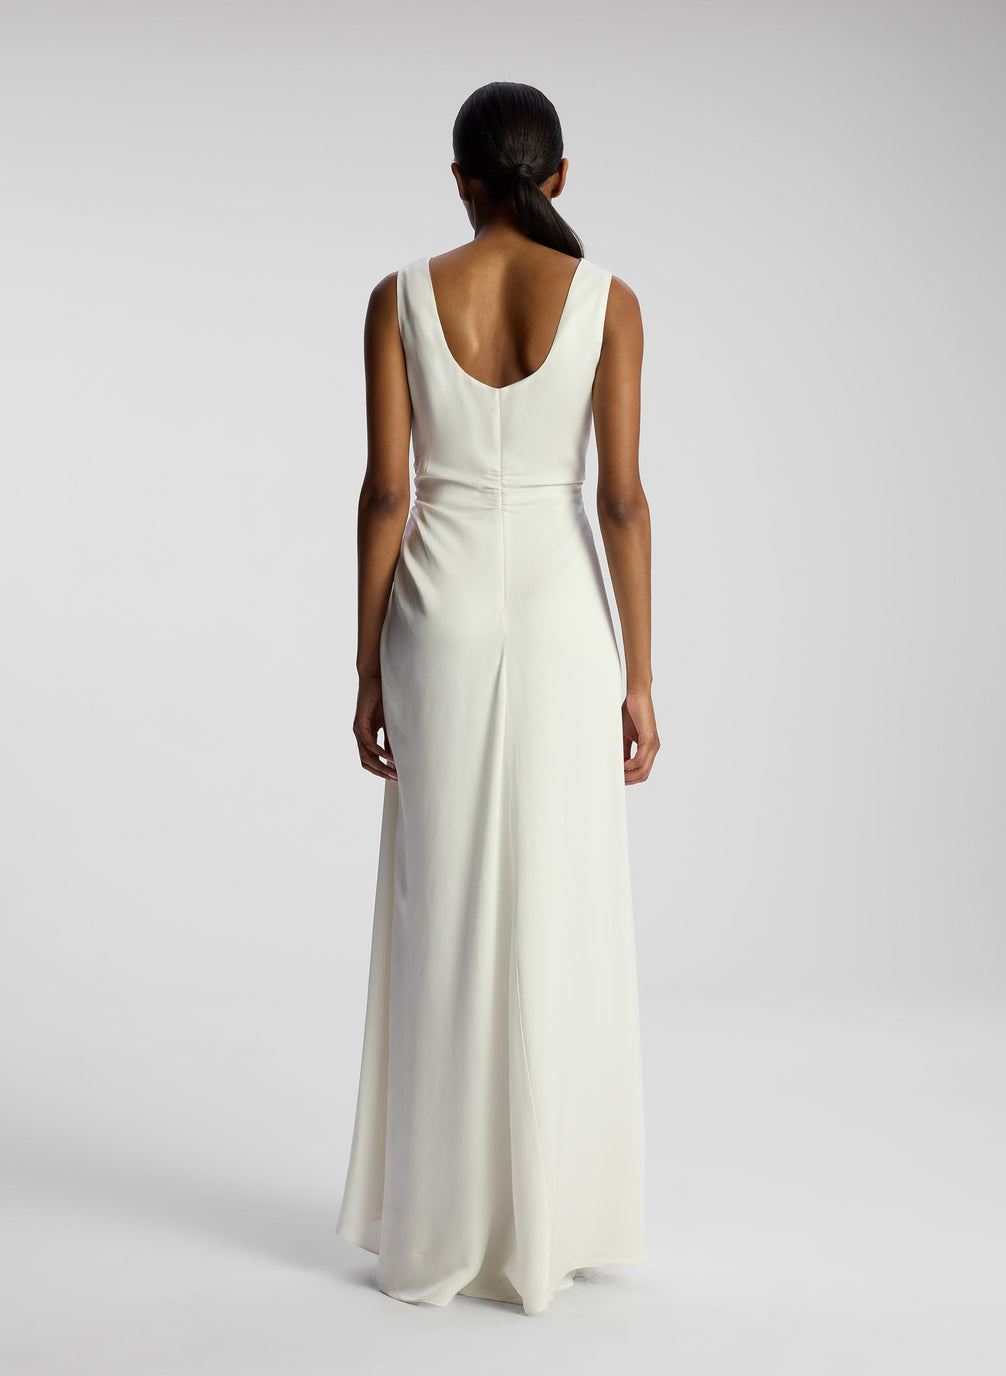 back view of woman wearing white maxi dress